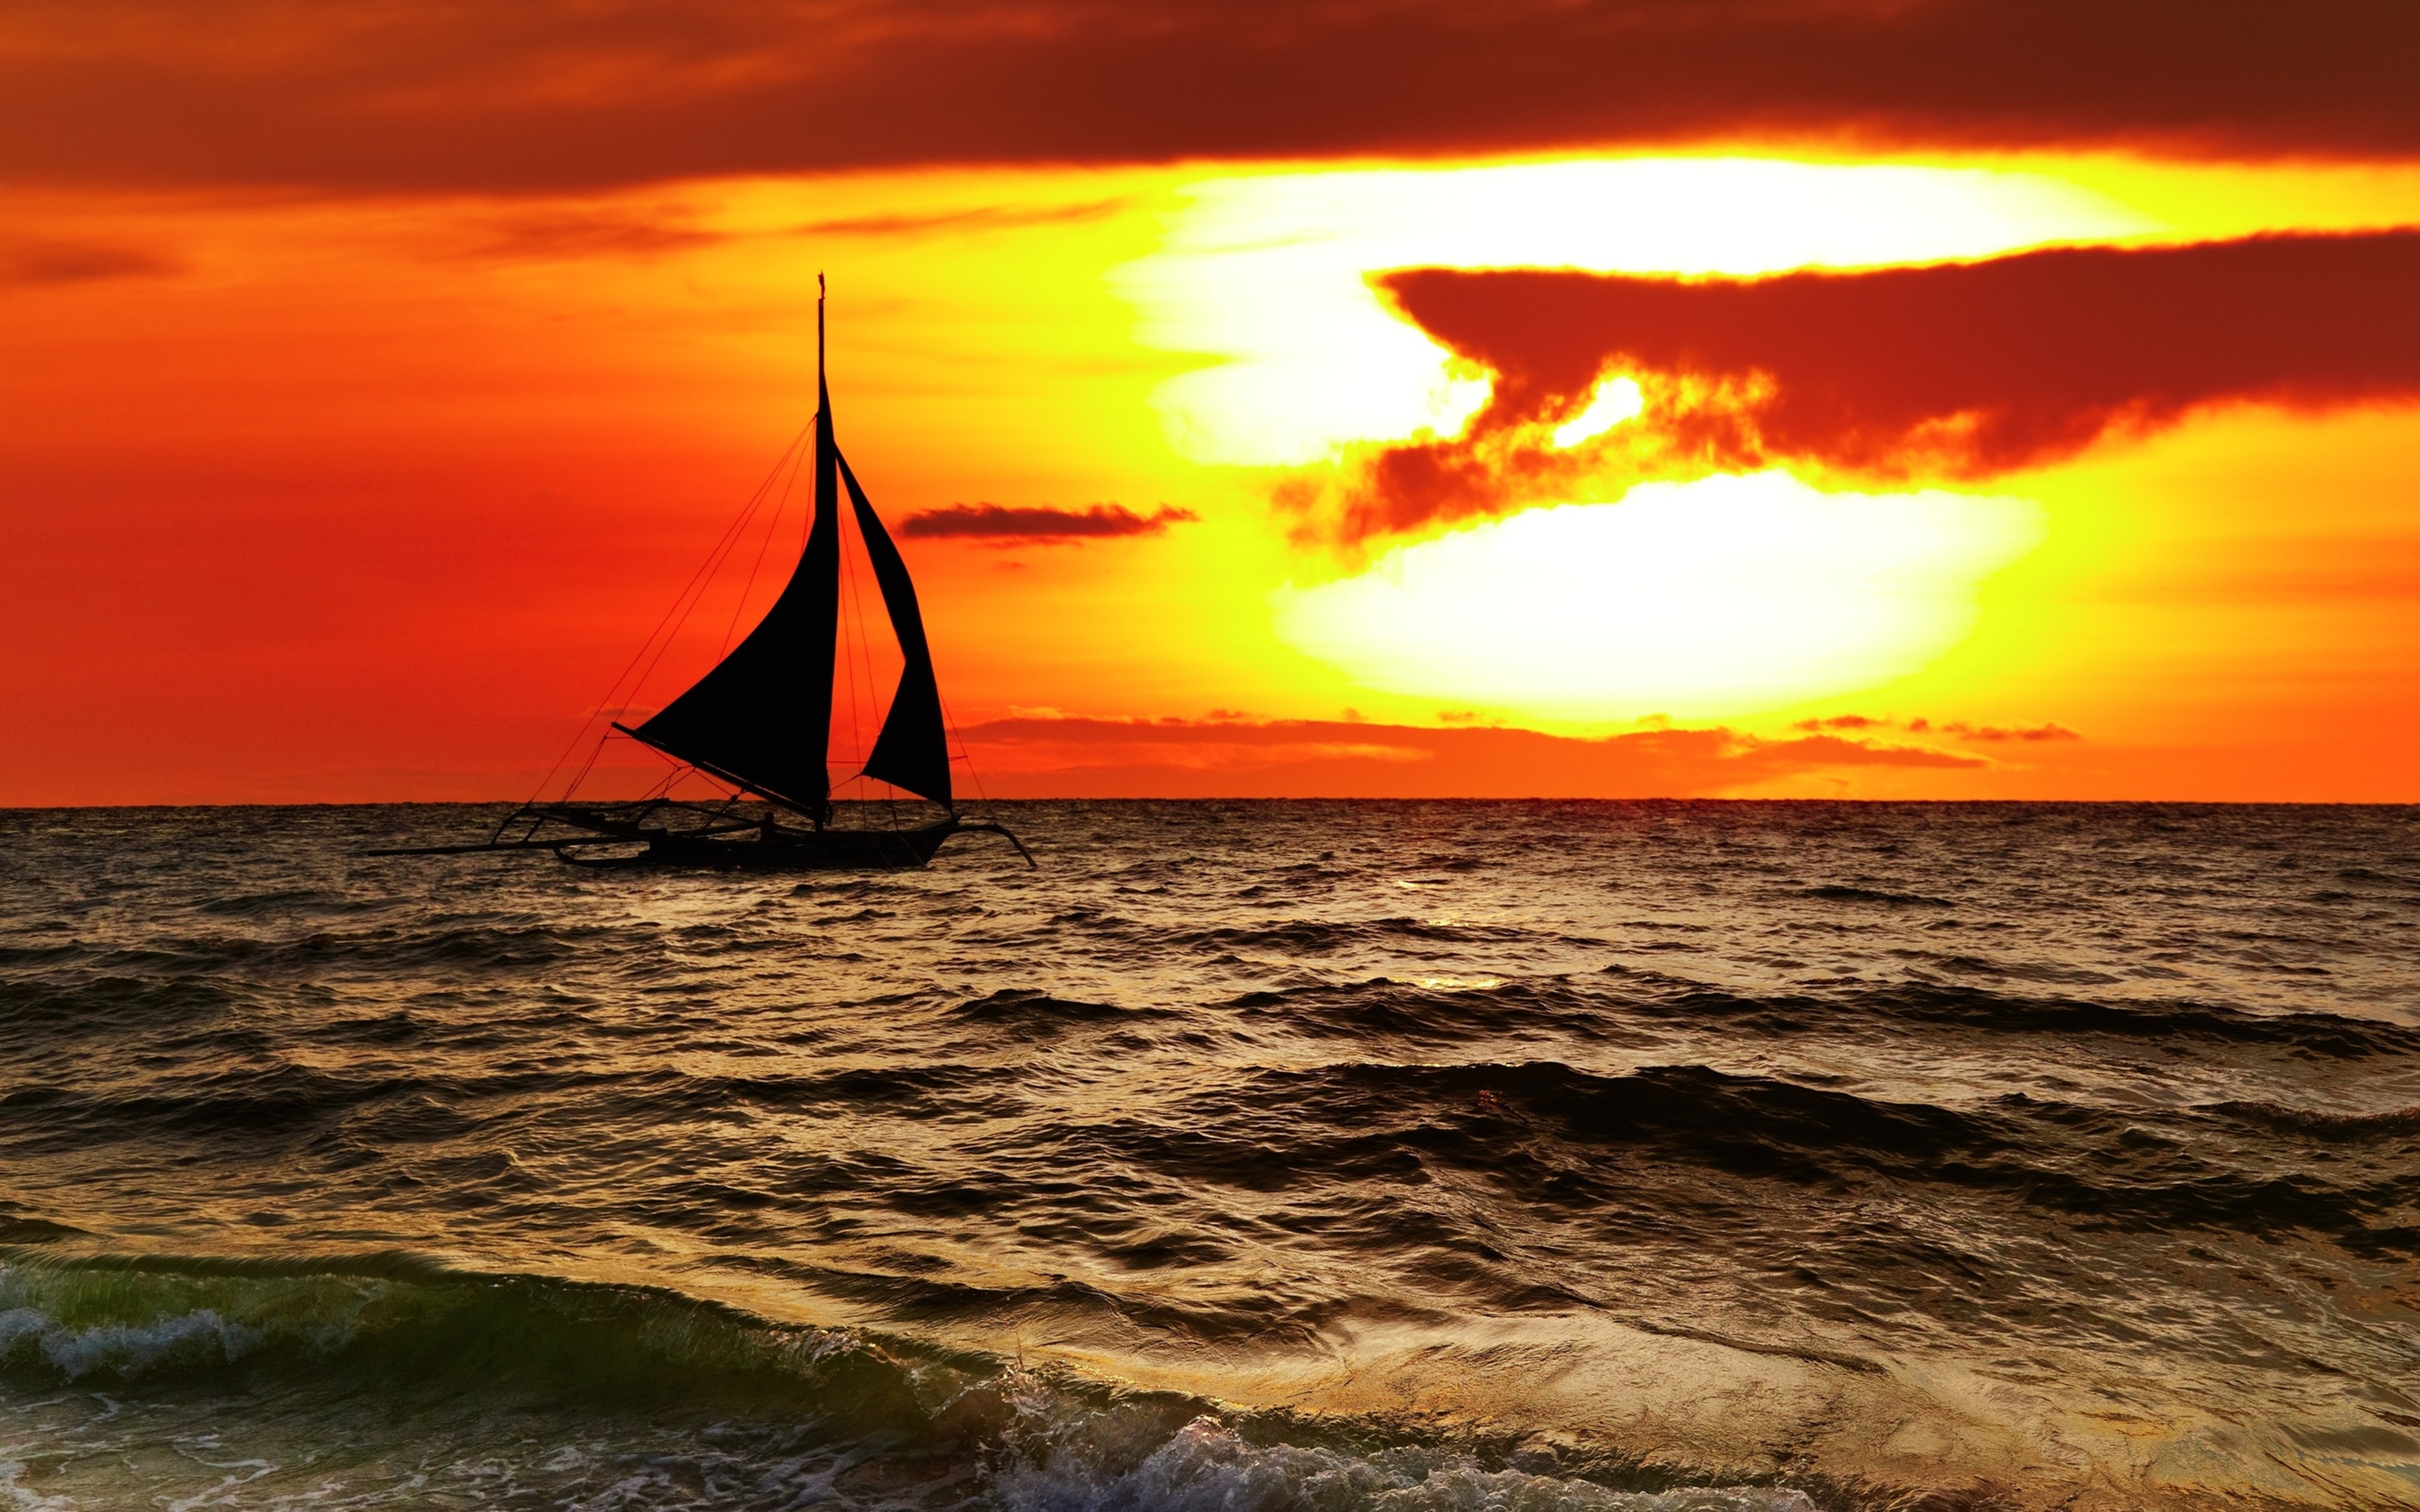 wallpapers photography, sunset, boat, cloud, landscape, nature, ocean, orange (color), sailing, sea, sun